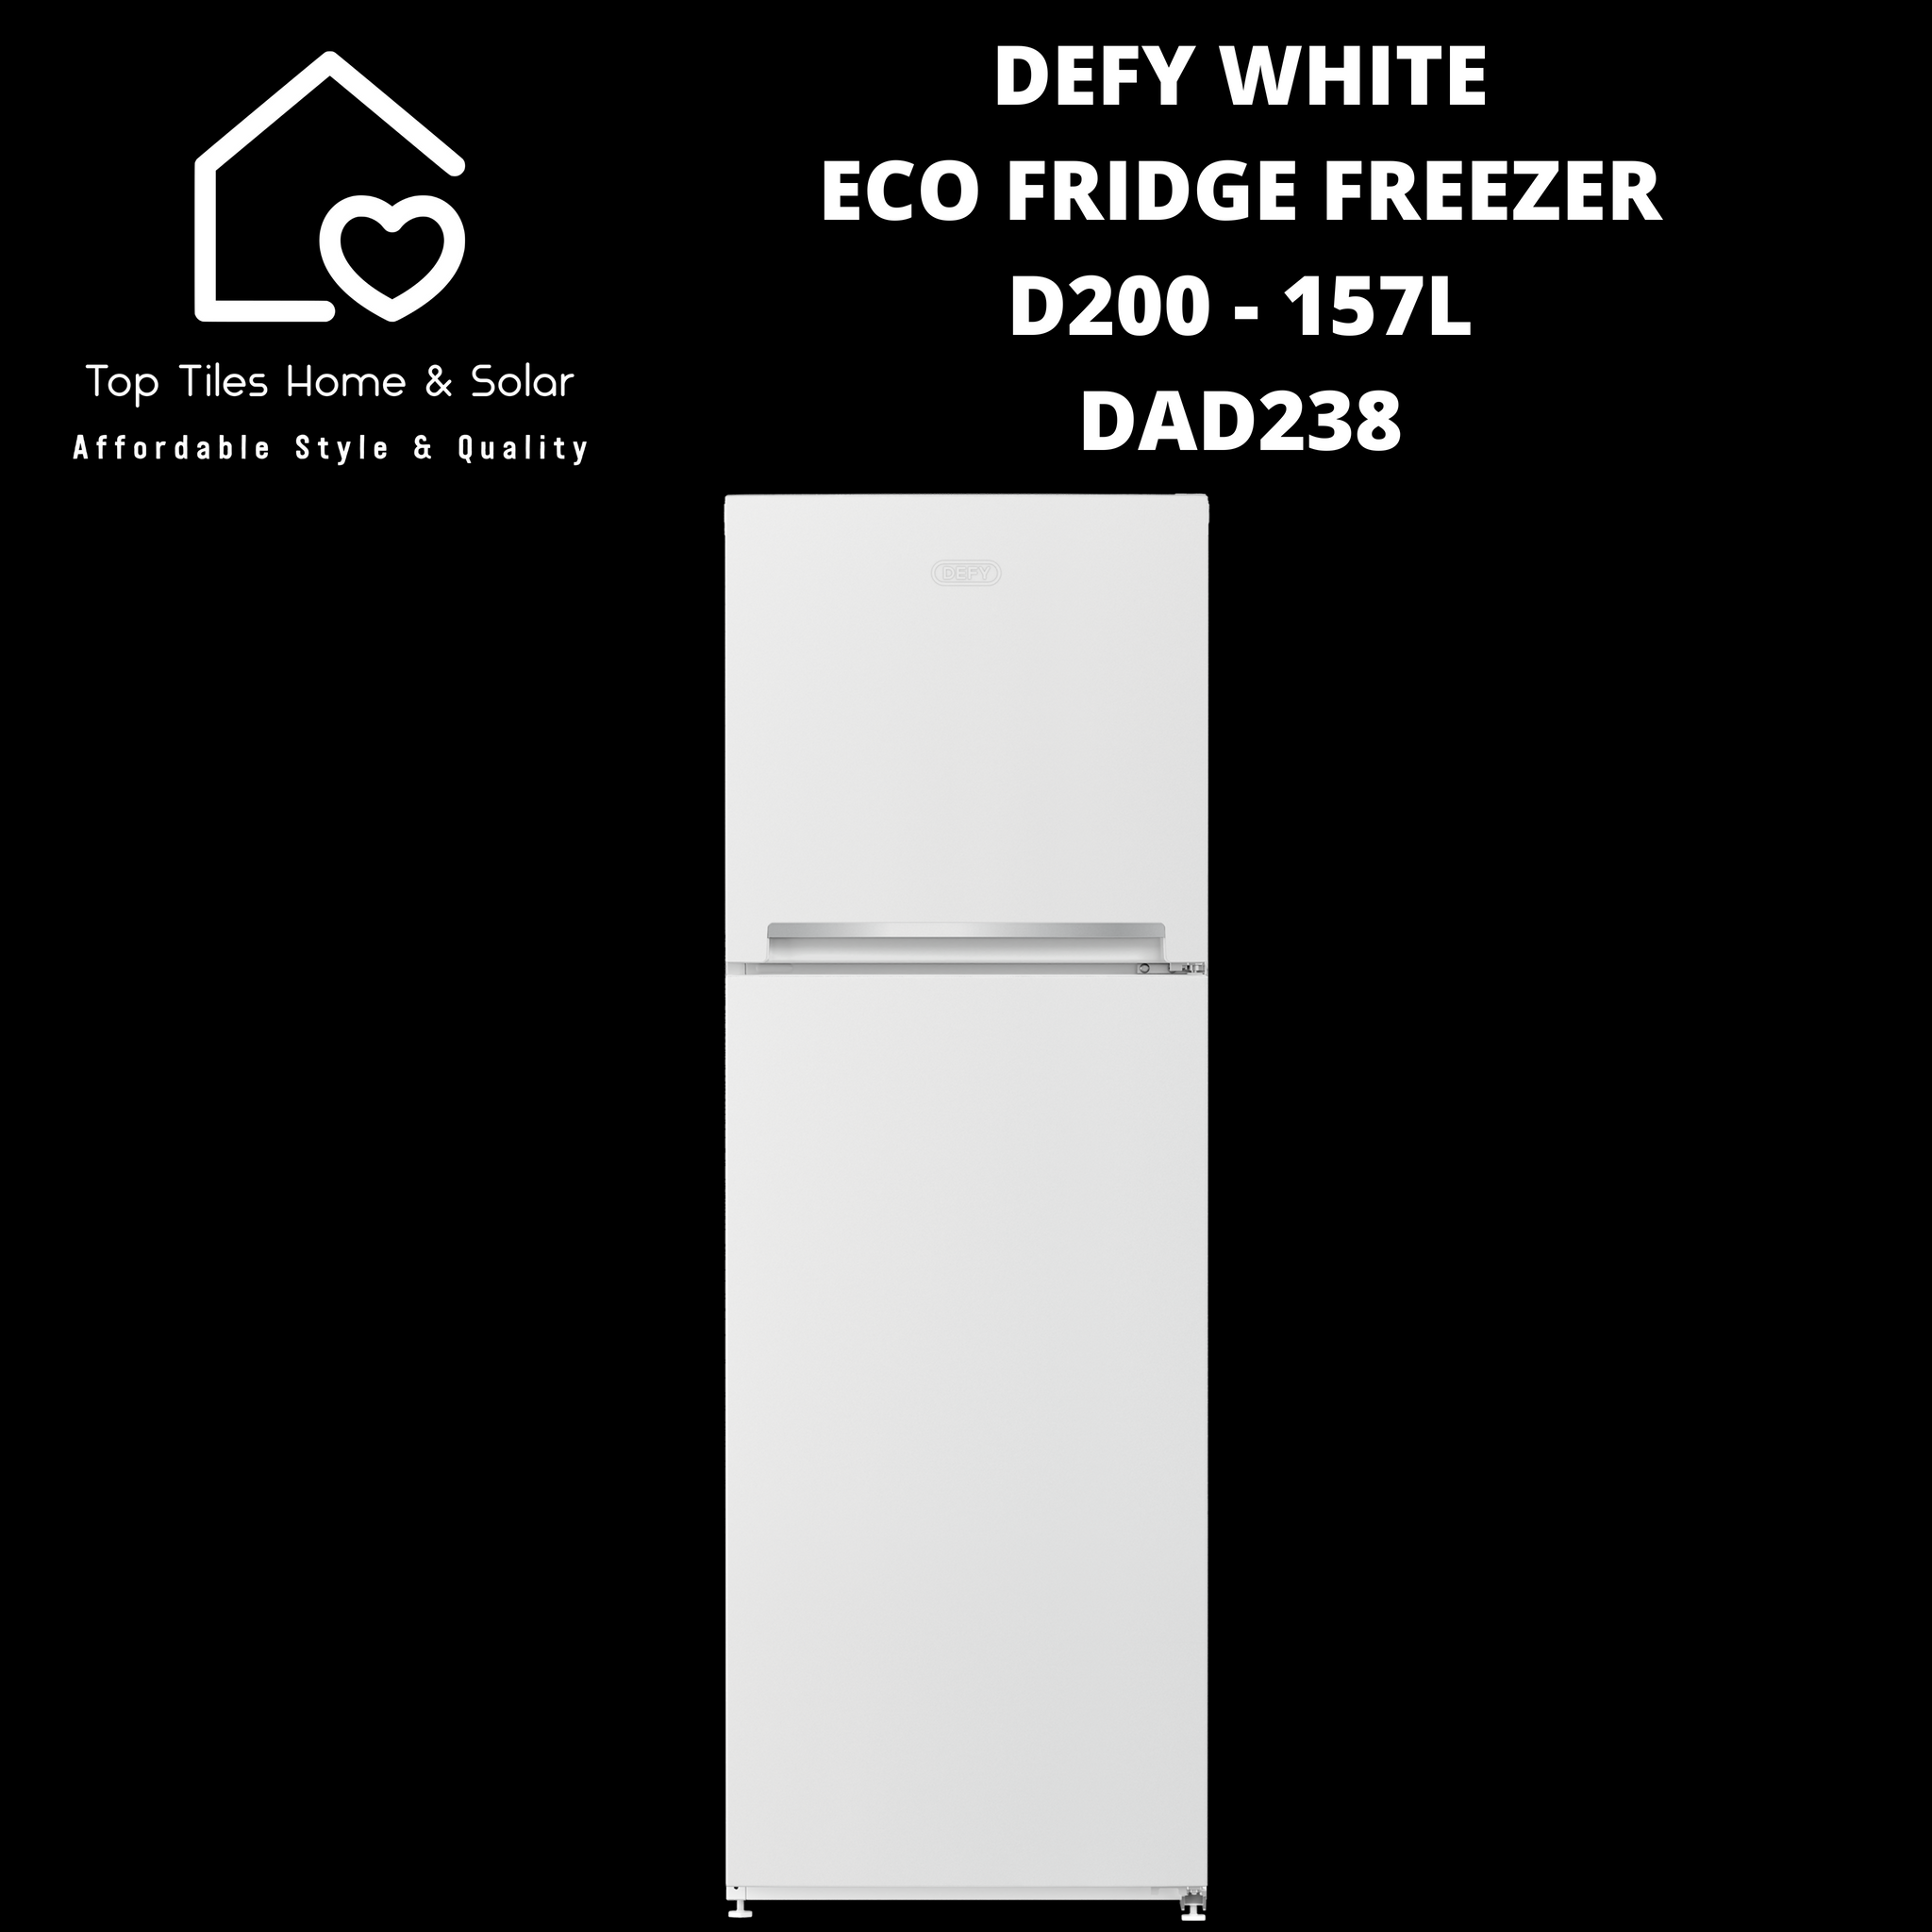 Defy White Eco Fridge Freezer D200 - 157L DAD238